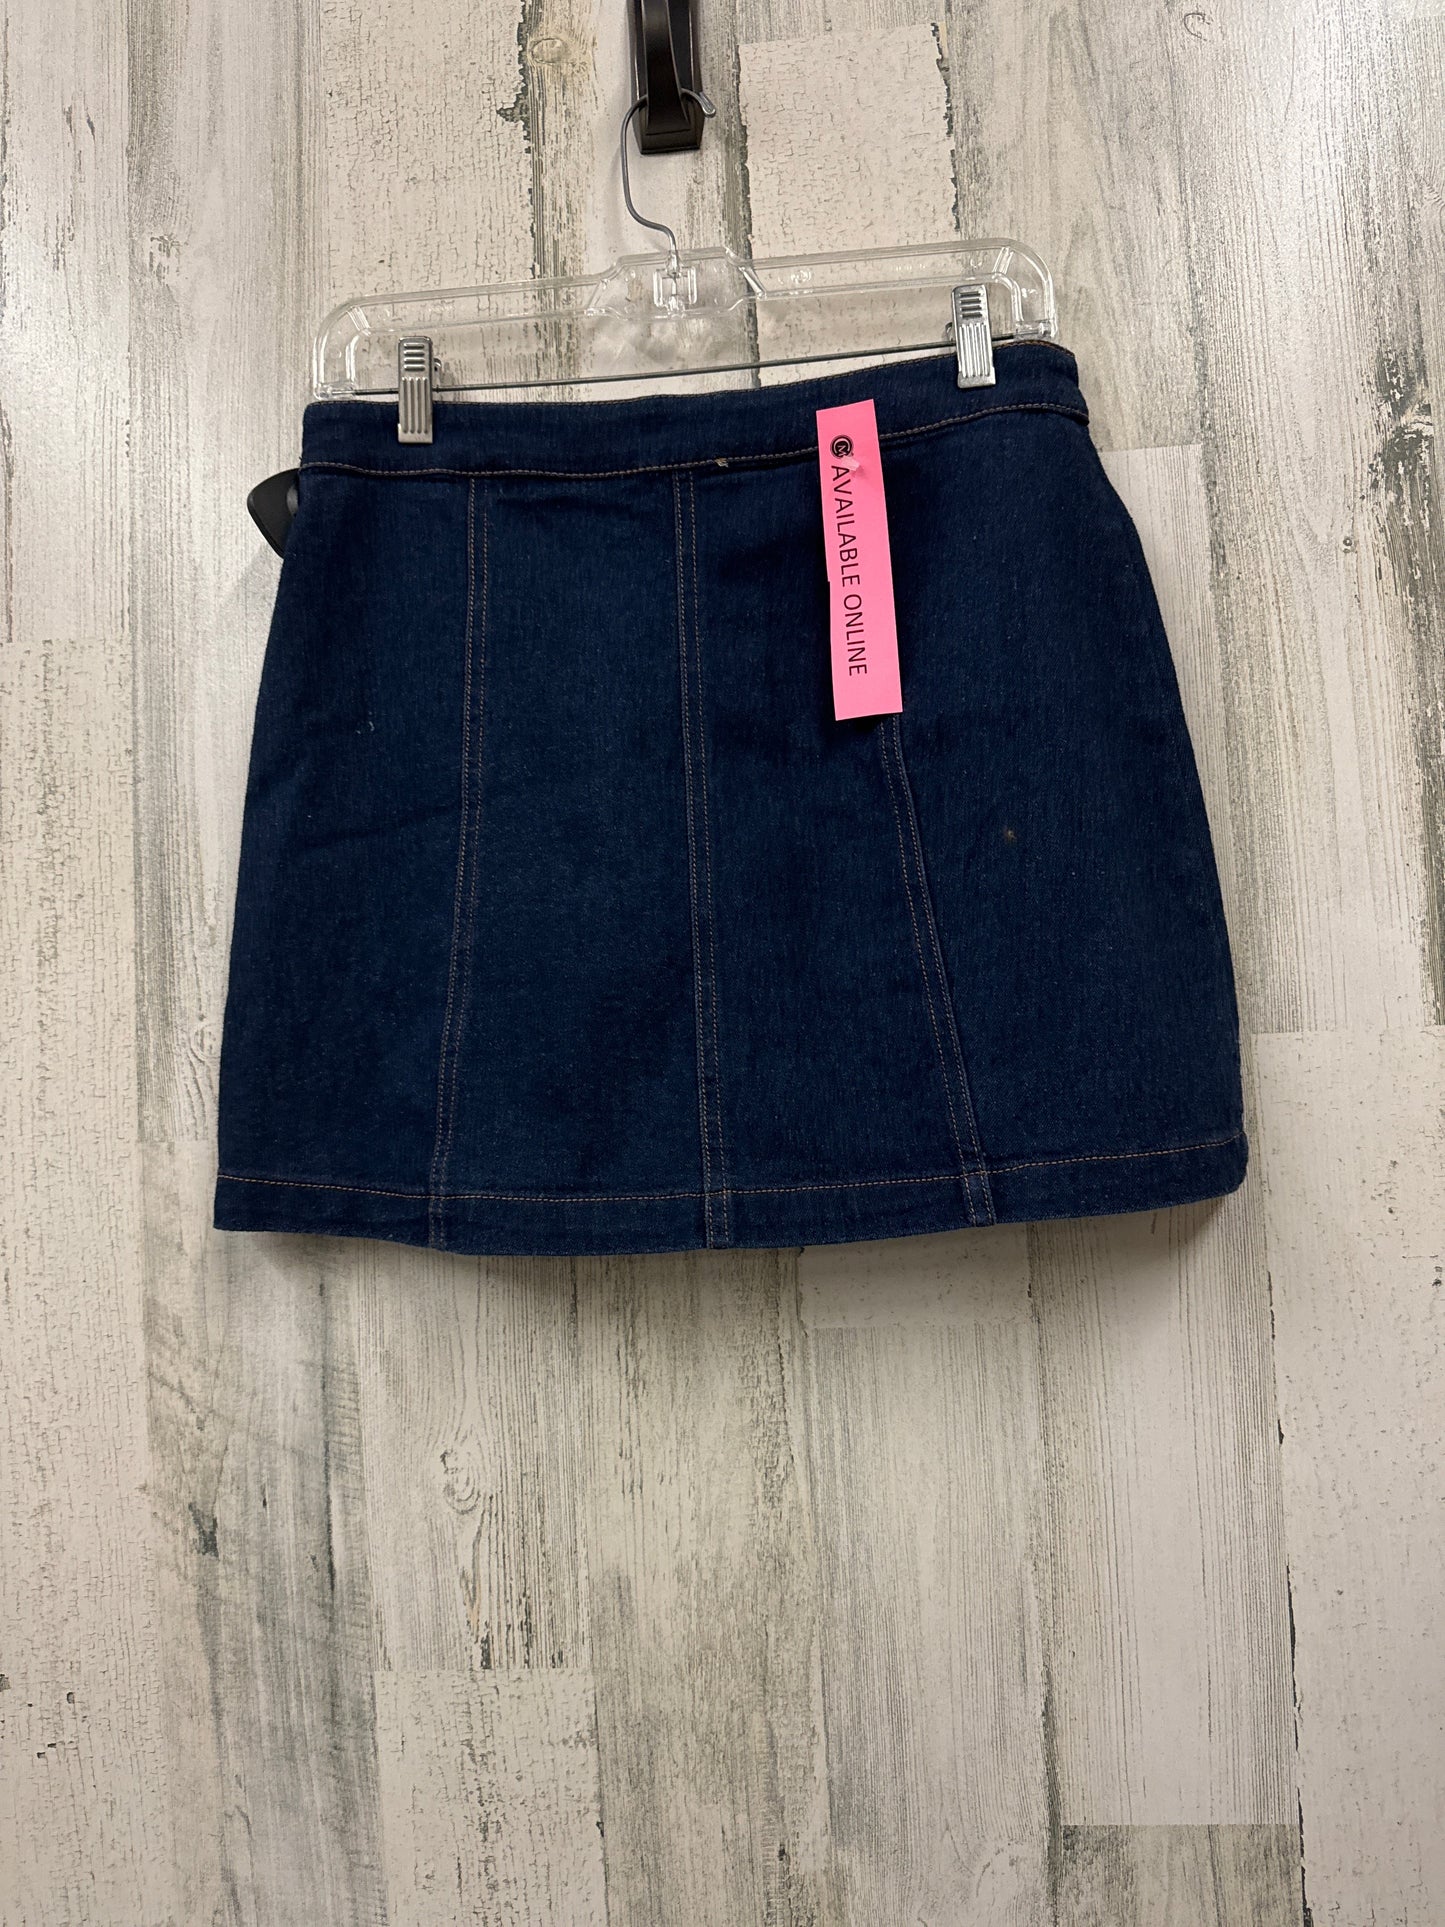 Blue Denim Skirt Mini & Short Cotton Candy, Size 8